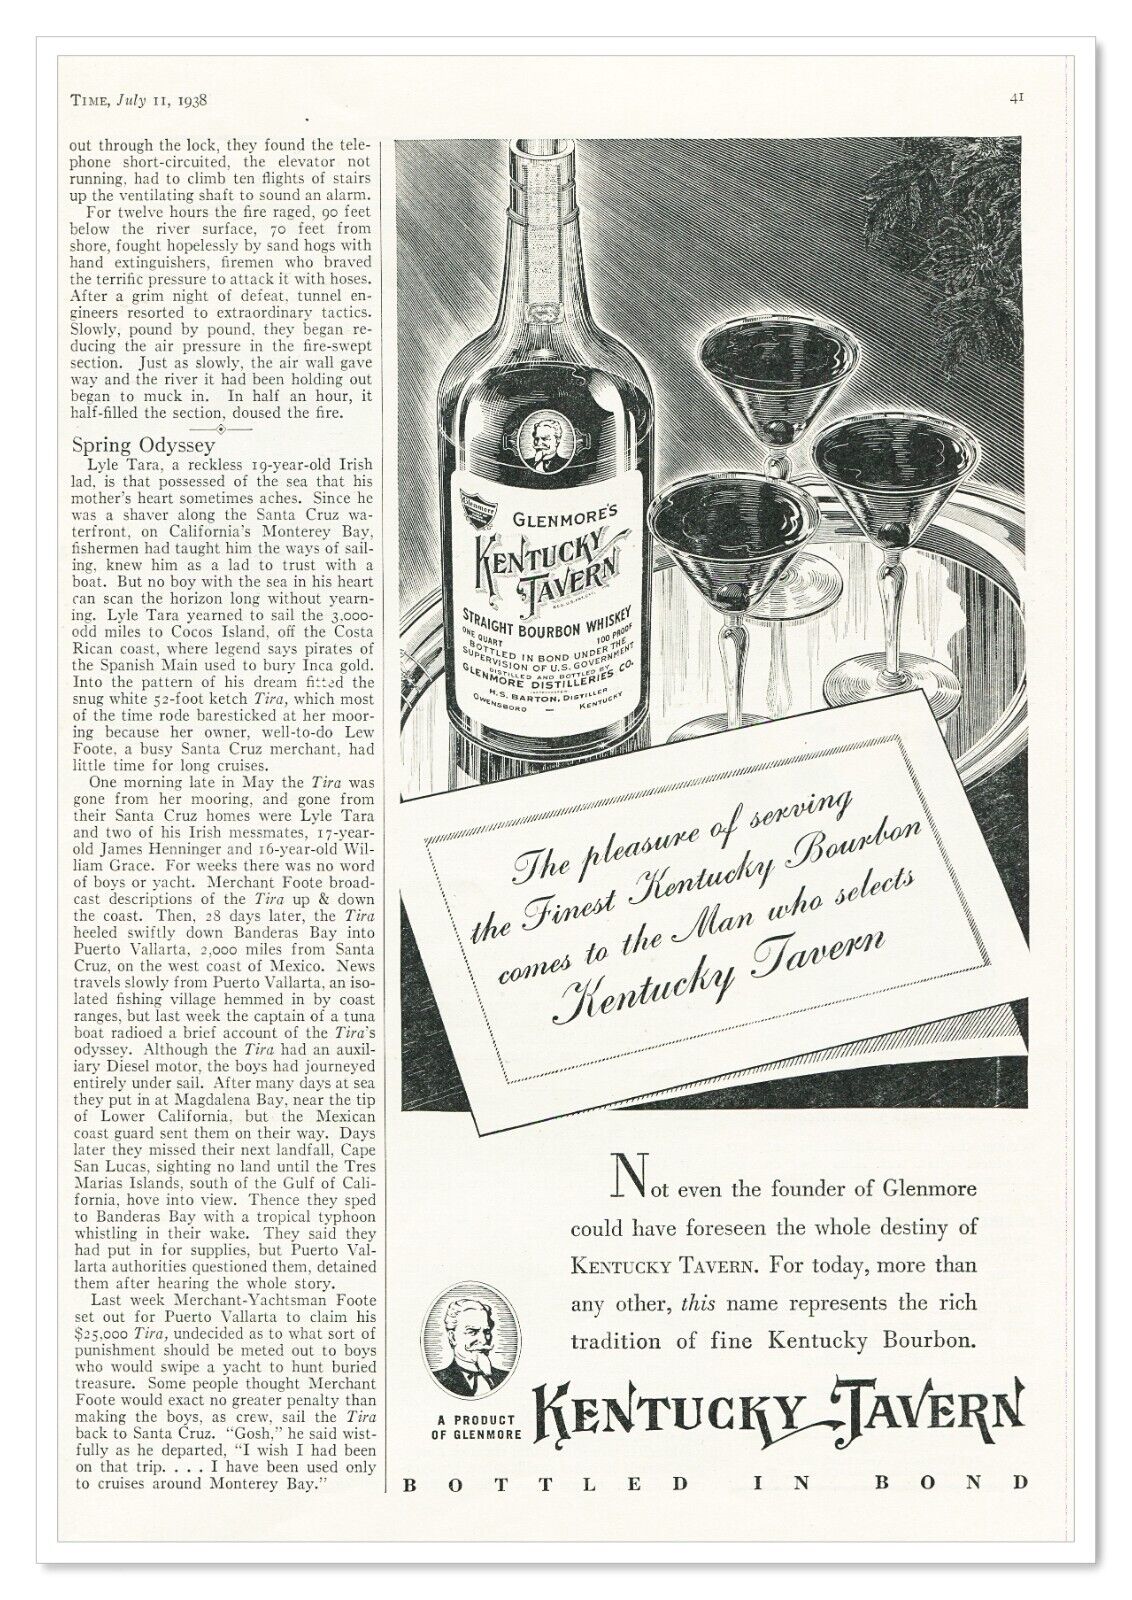 Print Ad Kentucky Tavern Bourbon Vintage 1938 3/4-Page Advertisement